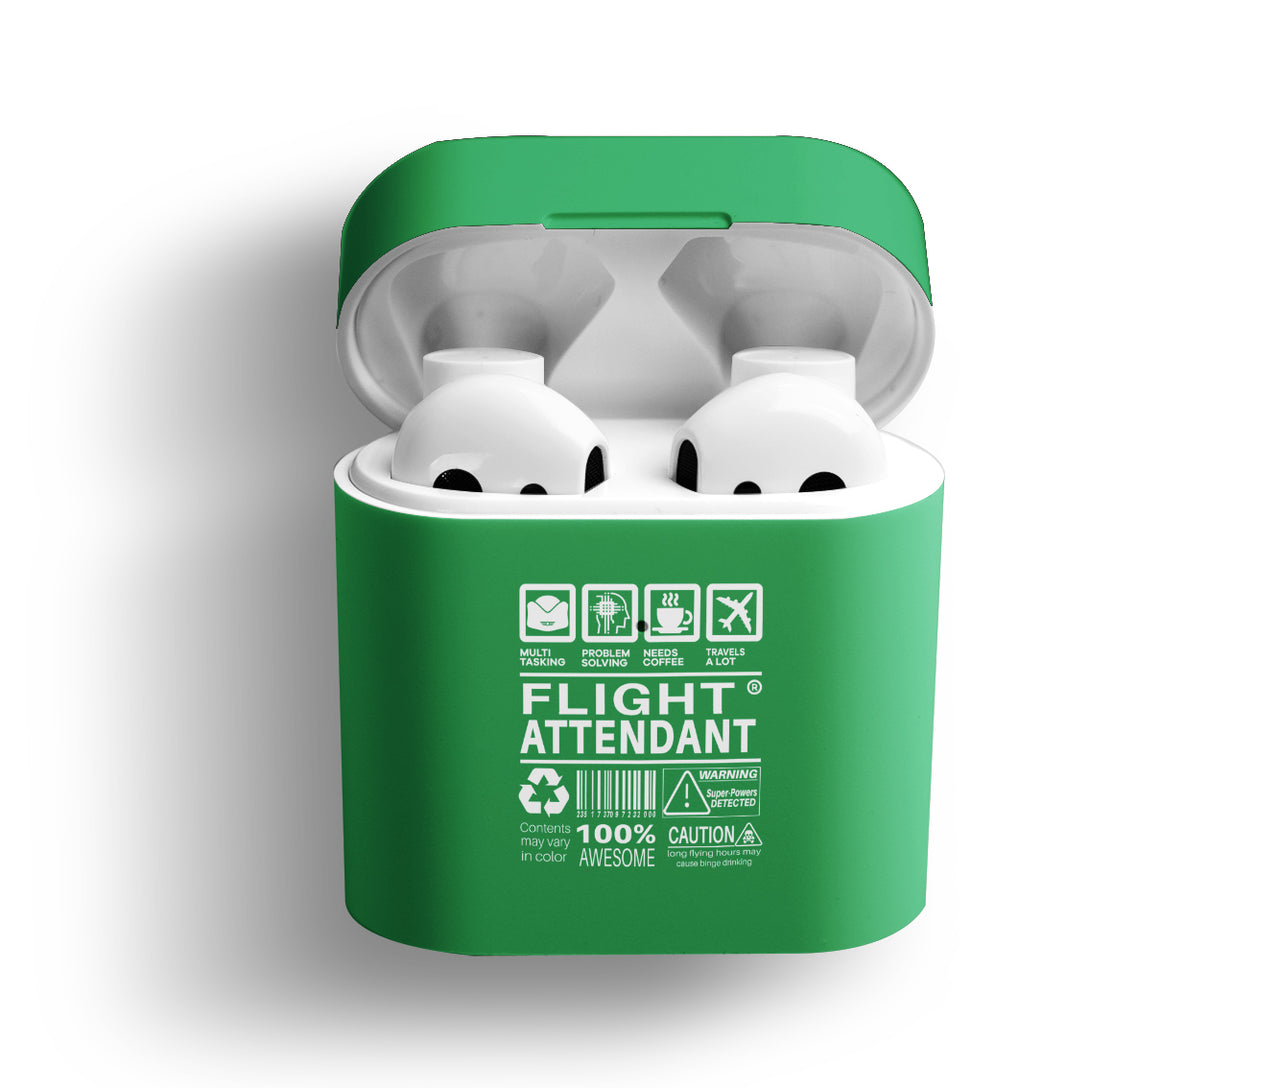 Flight Attendant Label Designed AirPods  Cases